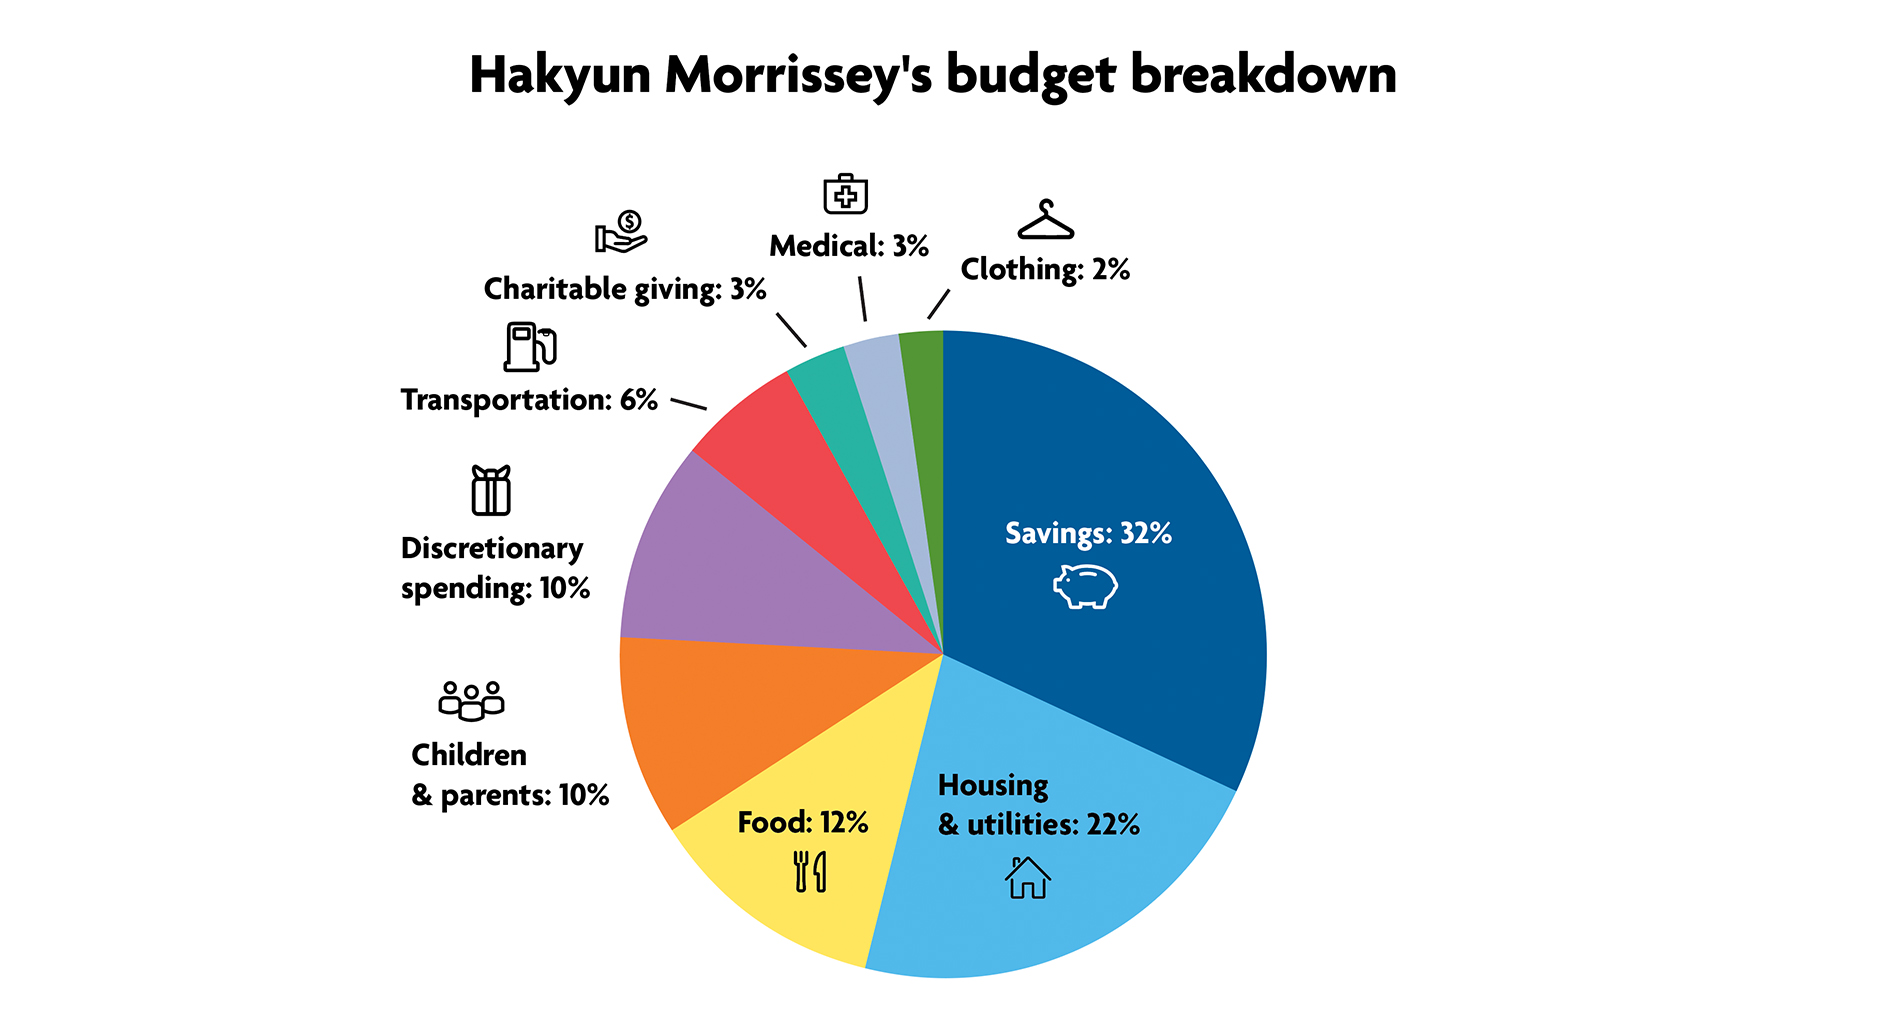 Hakyun Morrissey's budget breakdown piechart: Savings 32%, Housing 22%, Children 10%, Discretionary 10%, Food 12%, Charitable giving 3%, Transportation 6%, Medical 3%, Clothing 2%